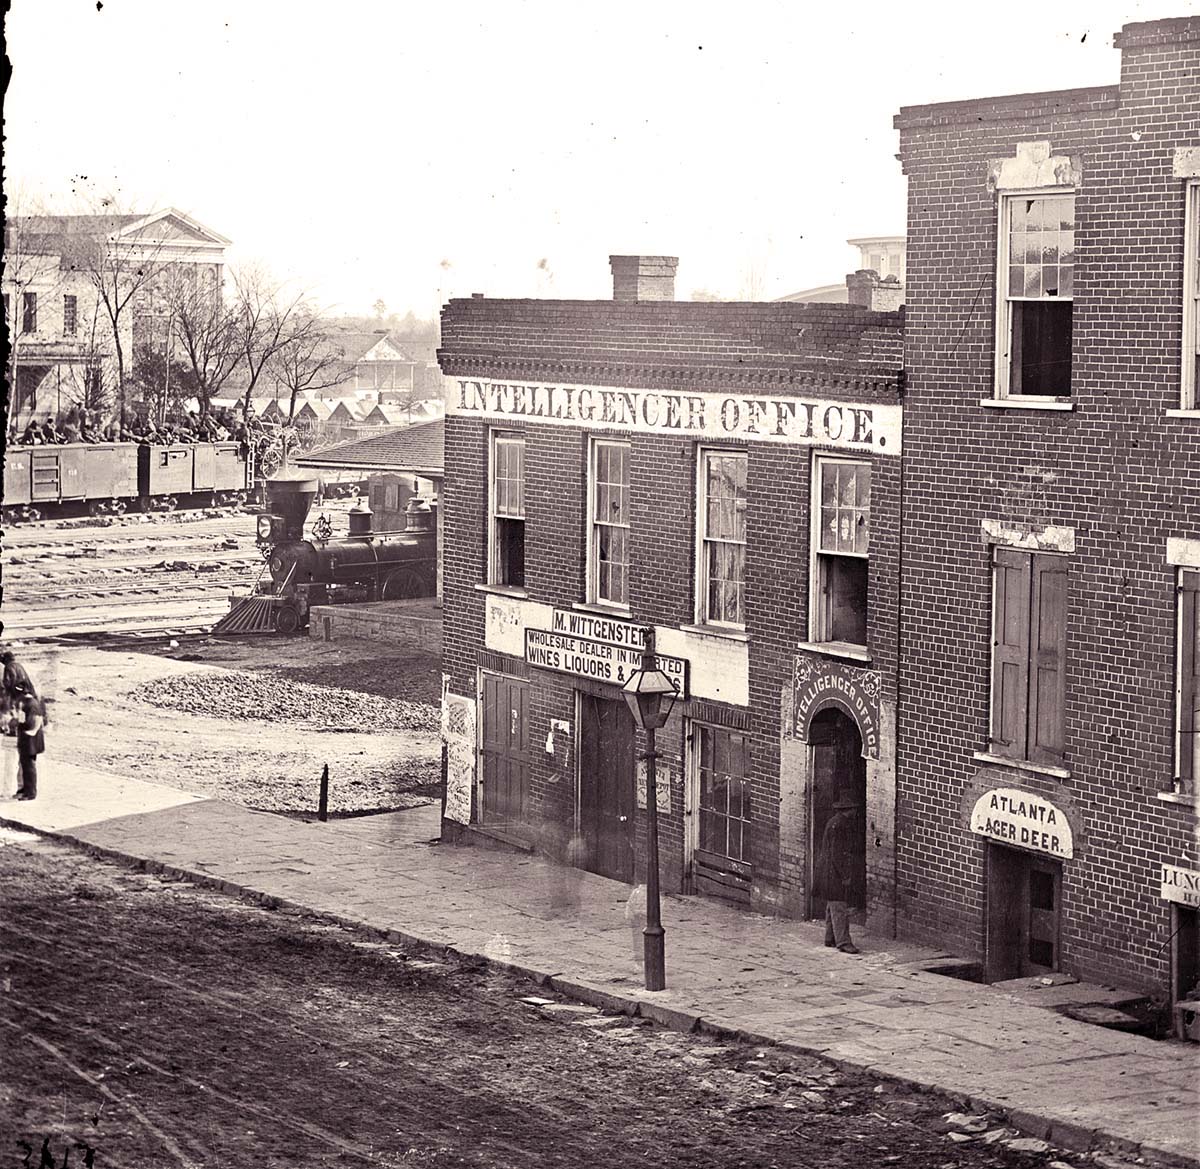 Atlanta. Intelligencer newspaper office by the railroad depot, 1864